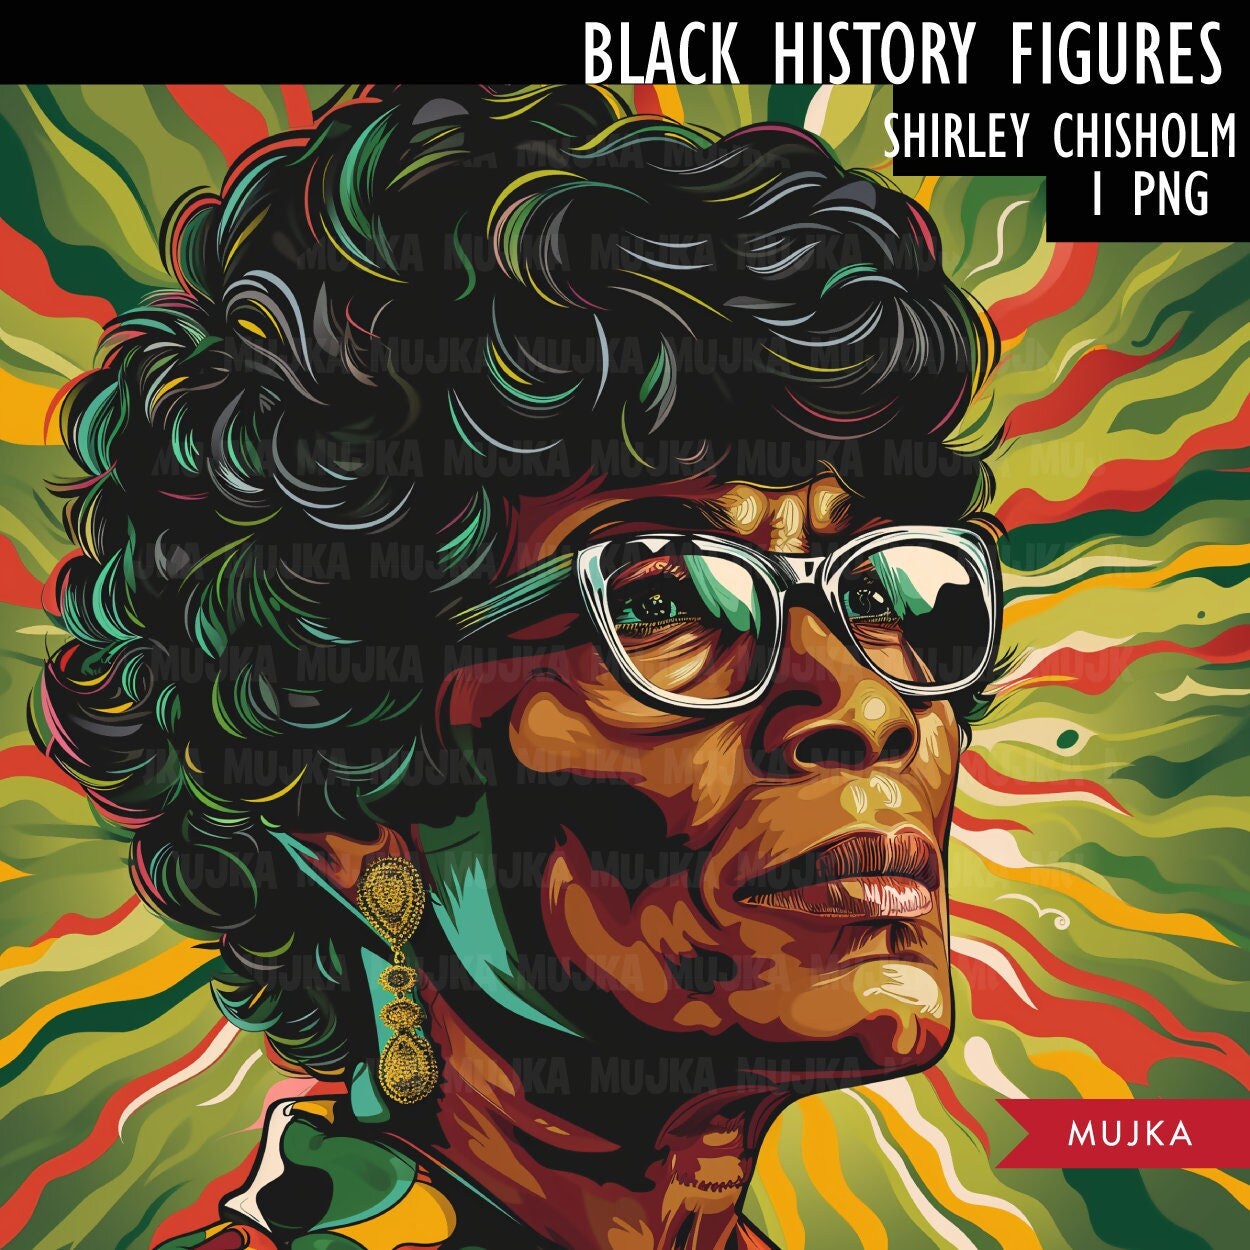 Black History PNG, Shirley Chisholm poster, Black History Cards, printable Black History Art, Black History wall art, sublimation design